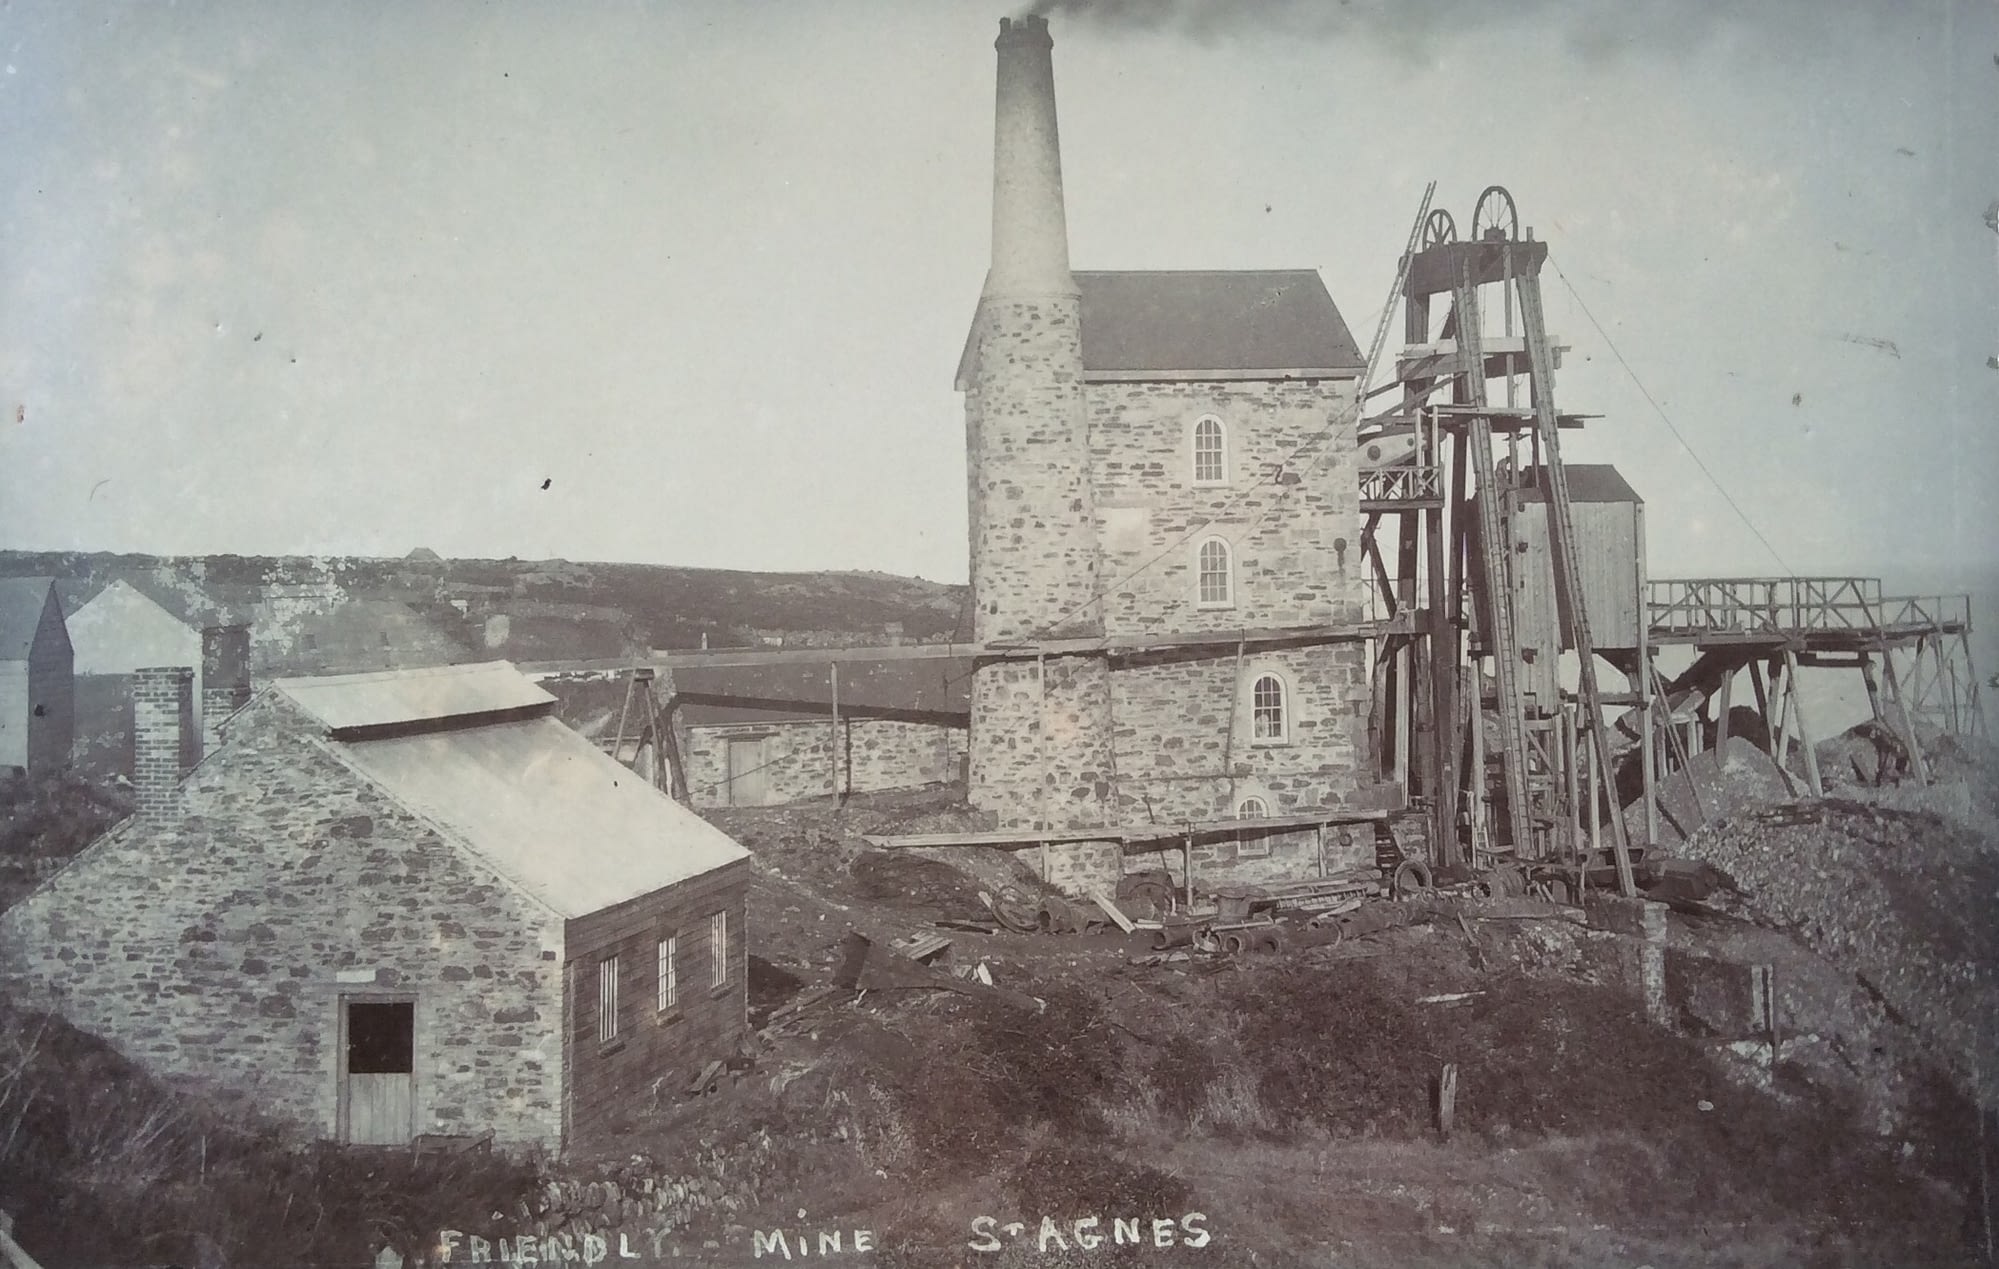 Postcard of Wheal Friendly Mine by Sammy Solway